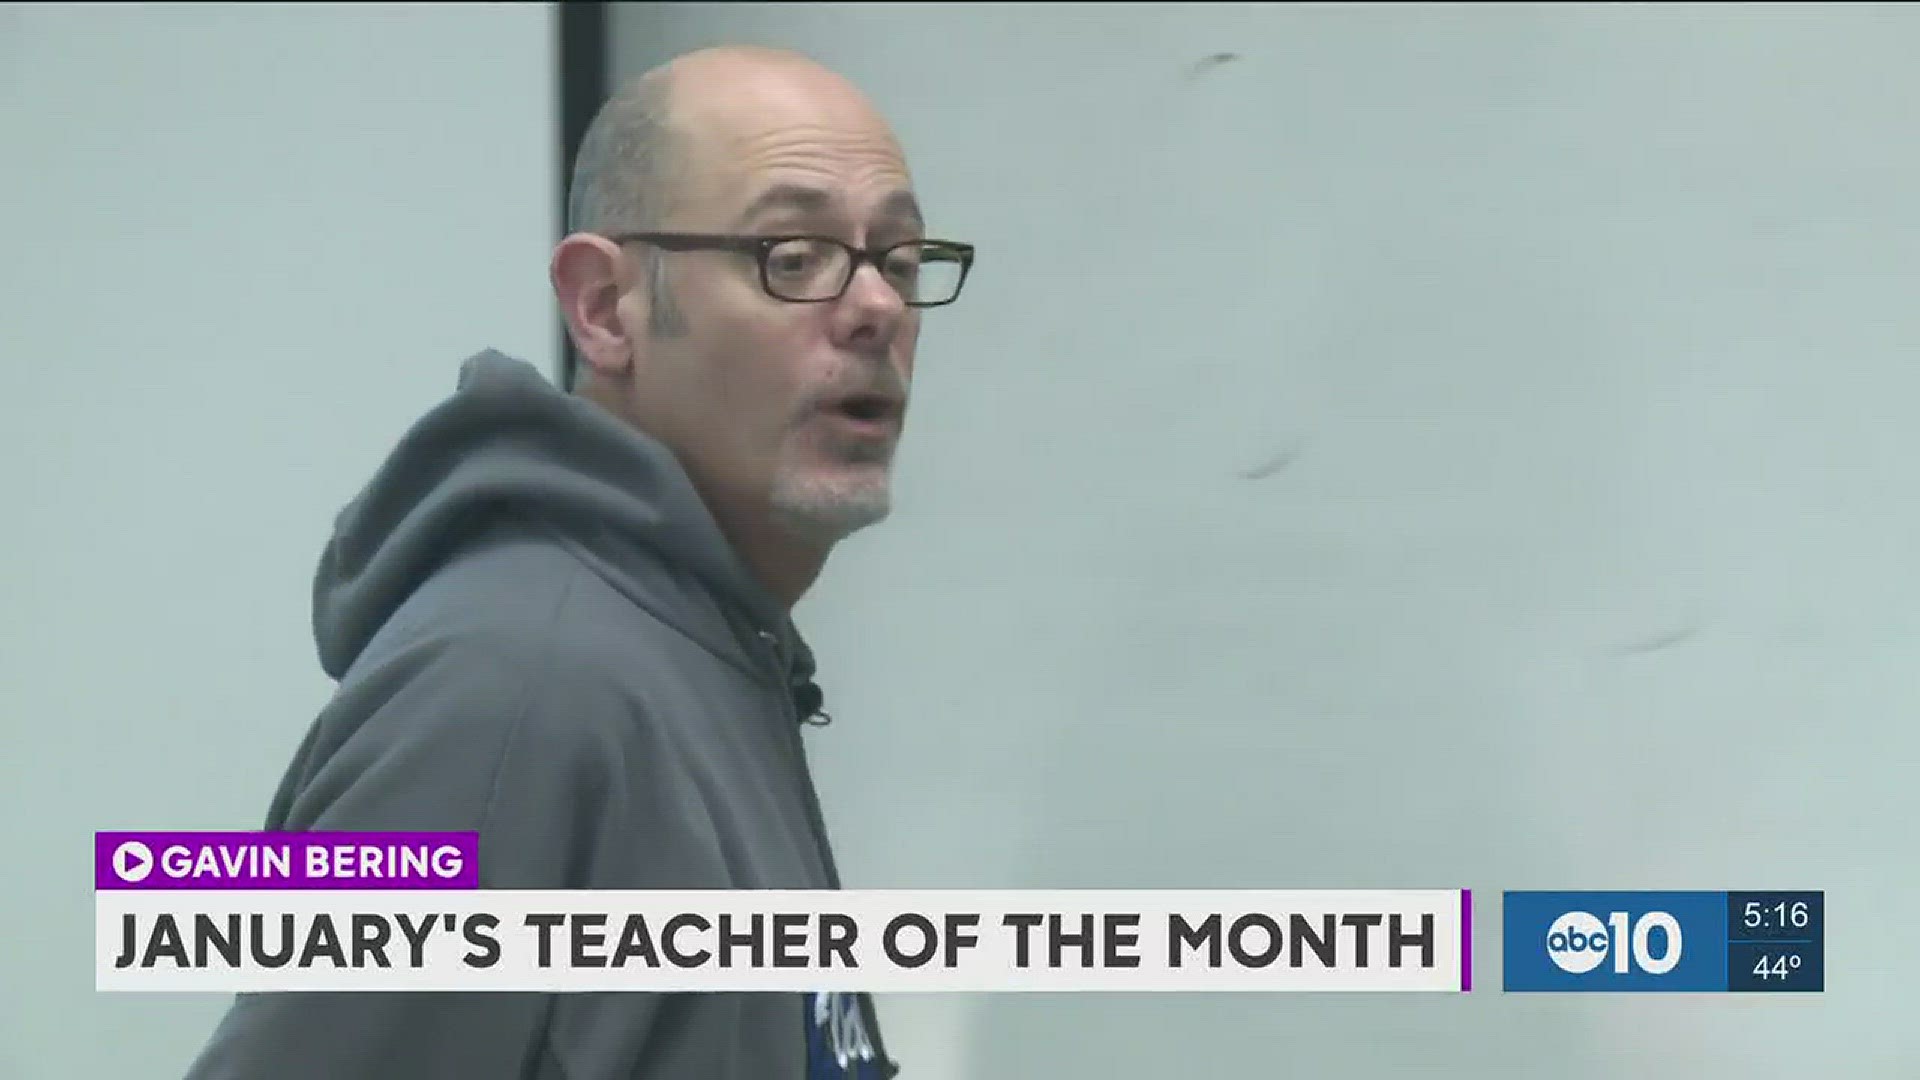 Gavin Bering is ABC10's Teacher of the Month.